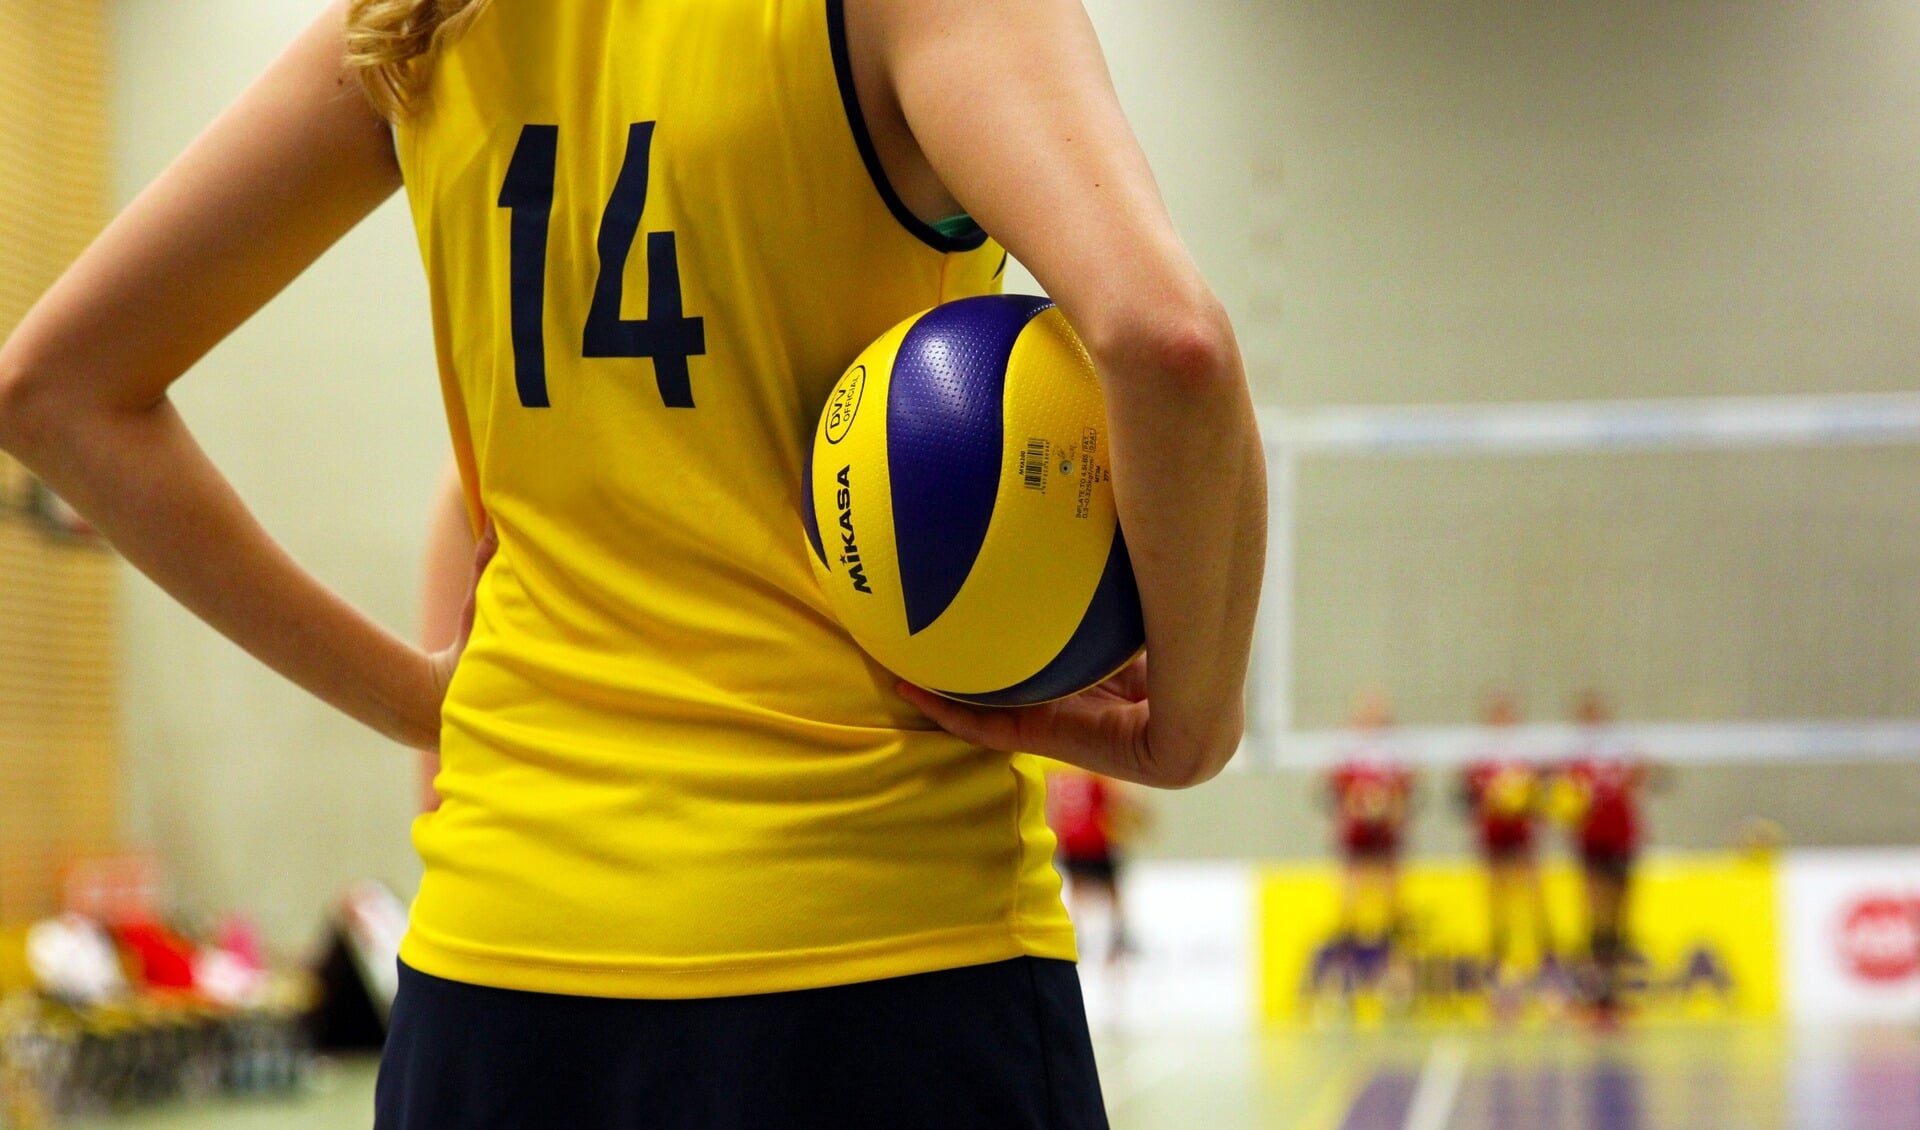 Volleybalvereniging VCJ'94 organiseert een Paasvolleybaltoernooi.